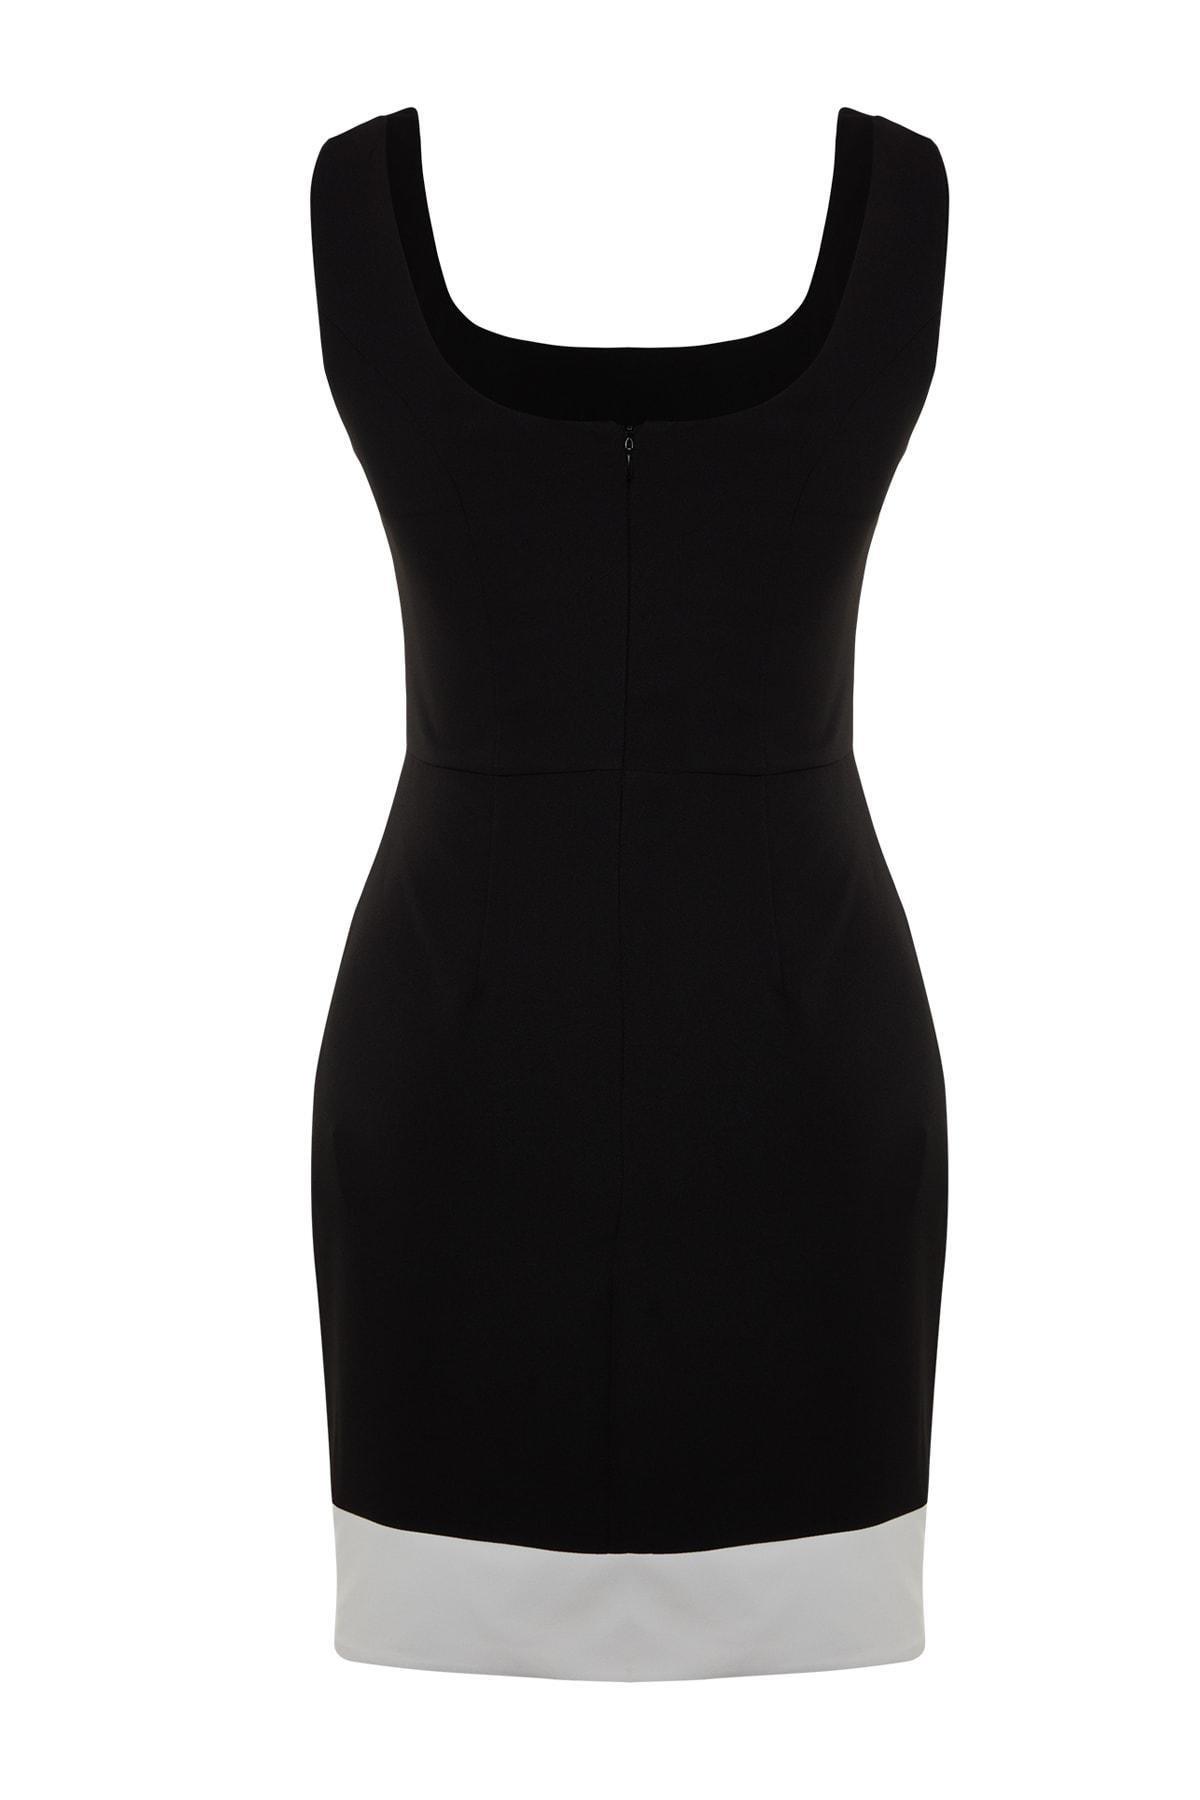 Trendyol - Black Colour block Square Collar Bodycon Dress